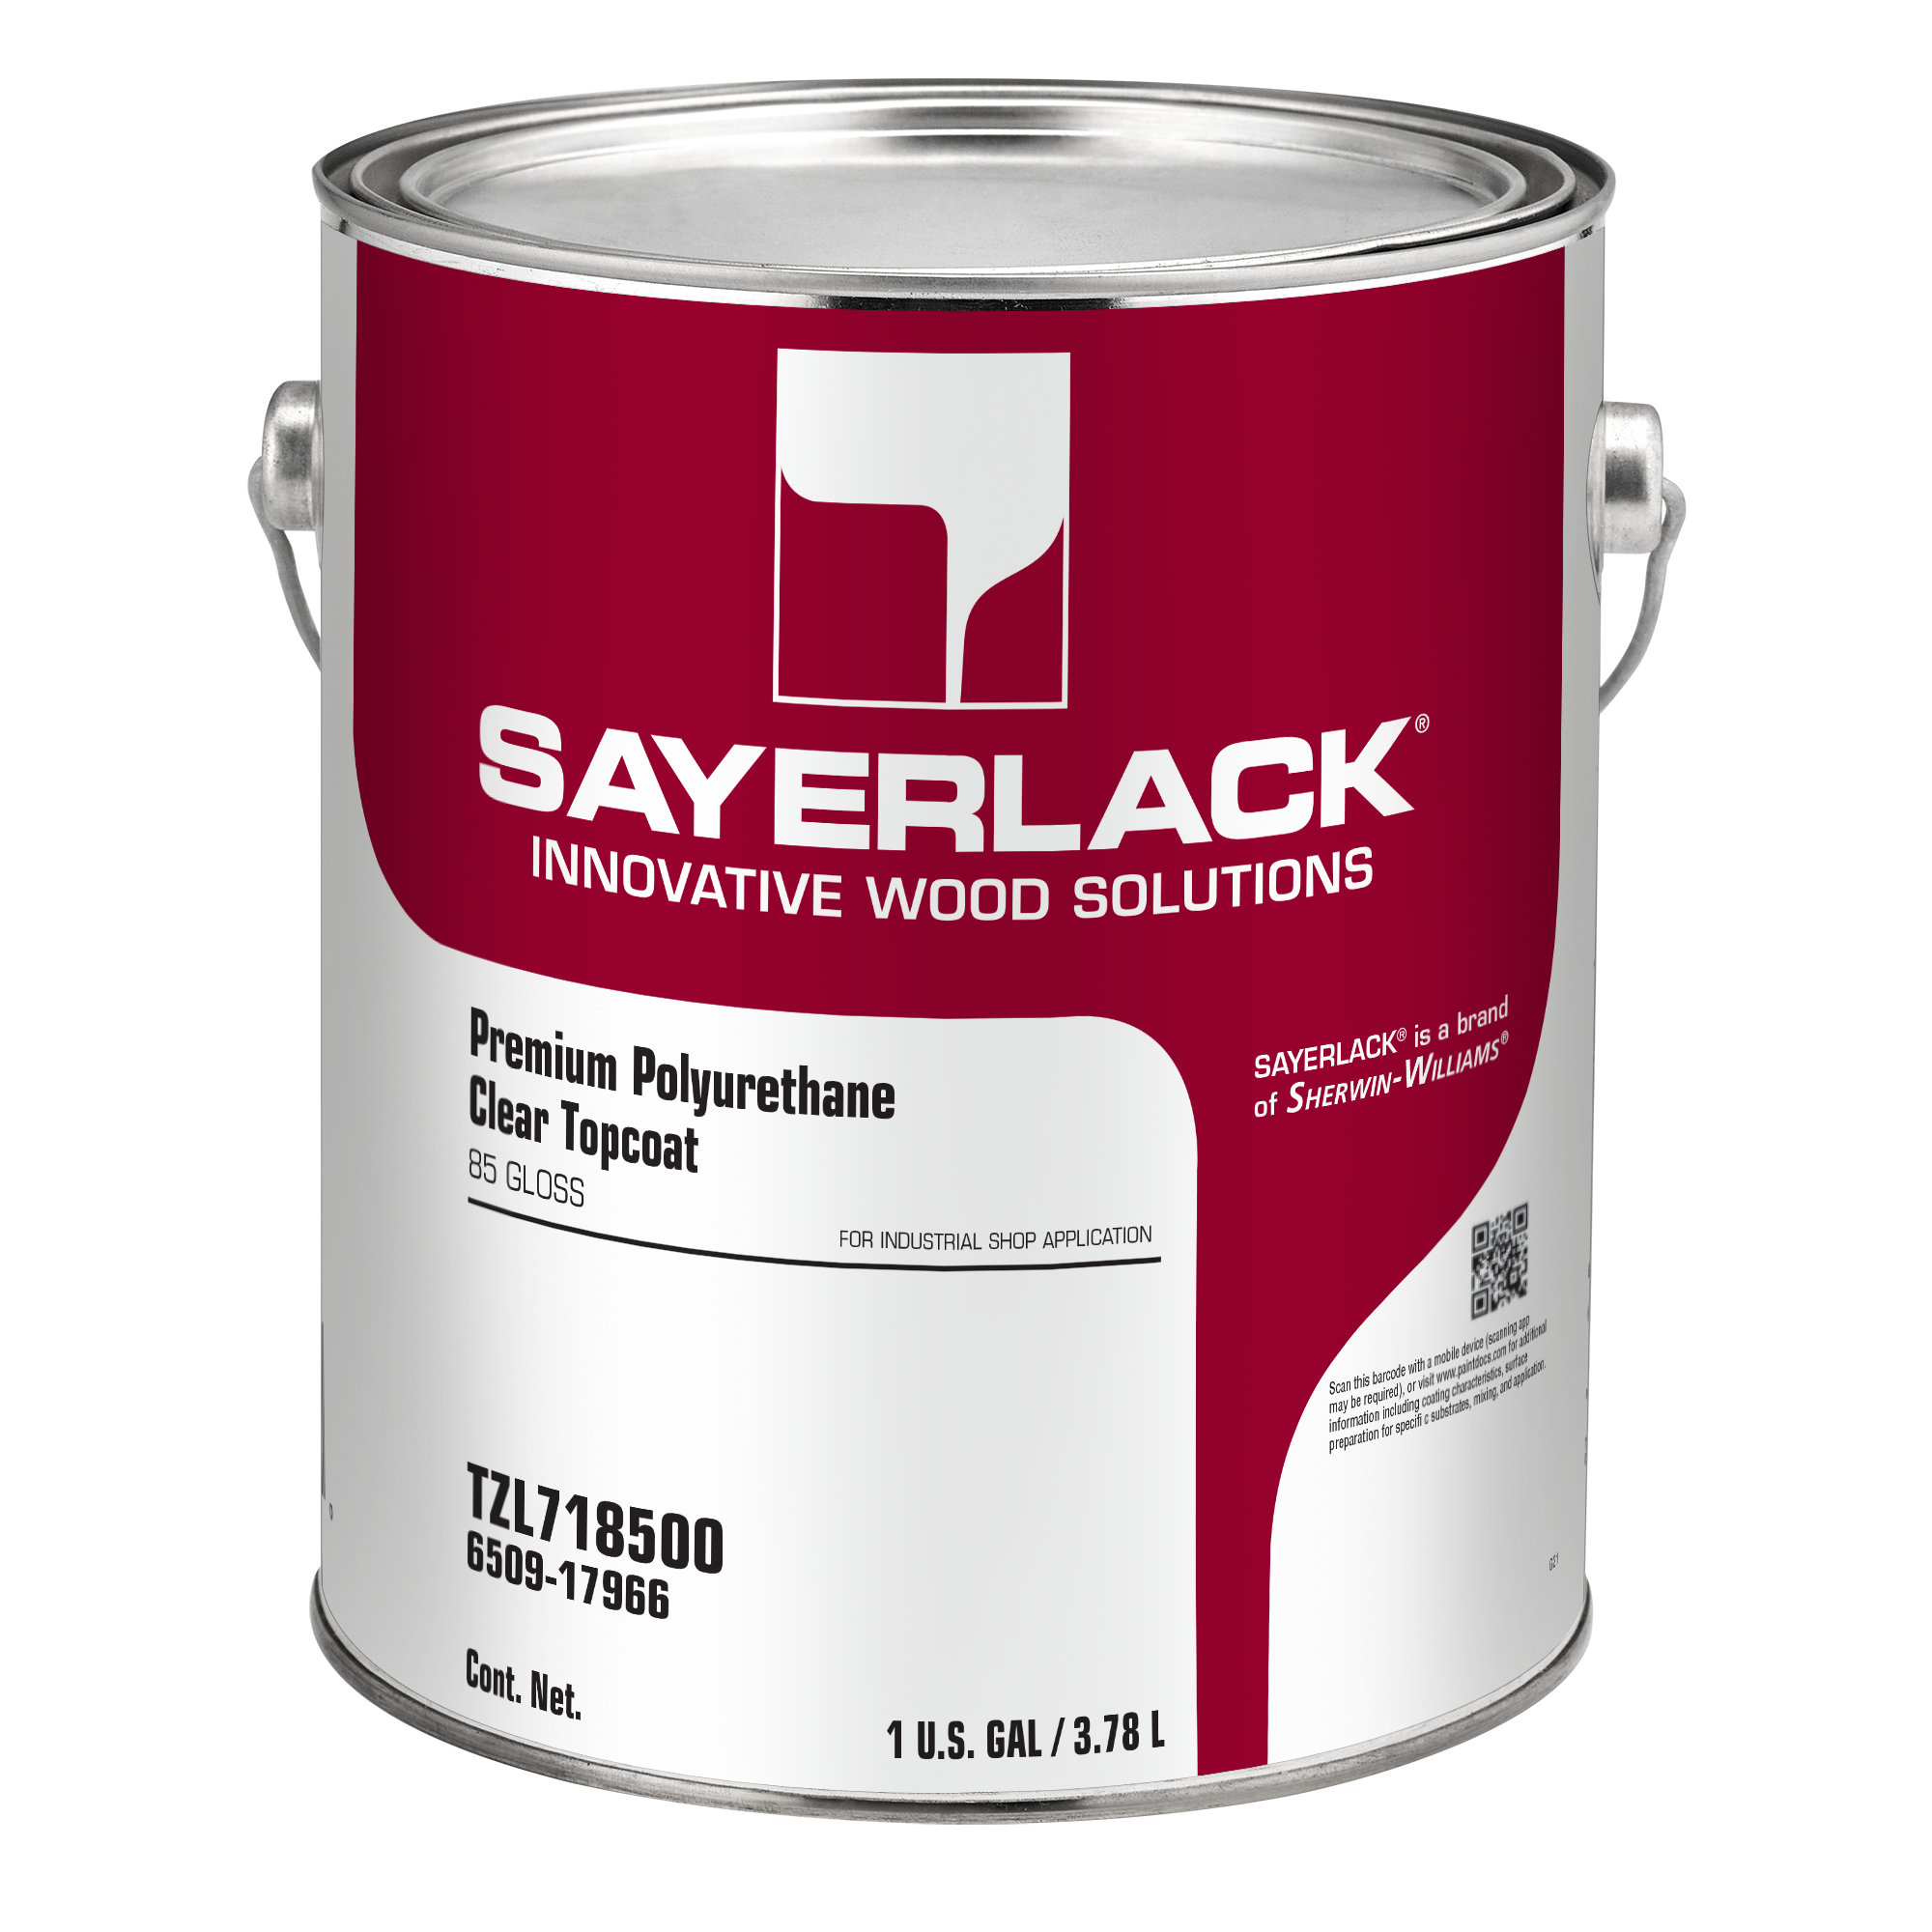 Sayerlack Premium Polyurethane Clear Topcoat